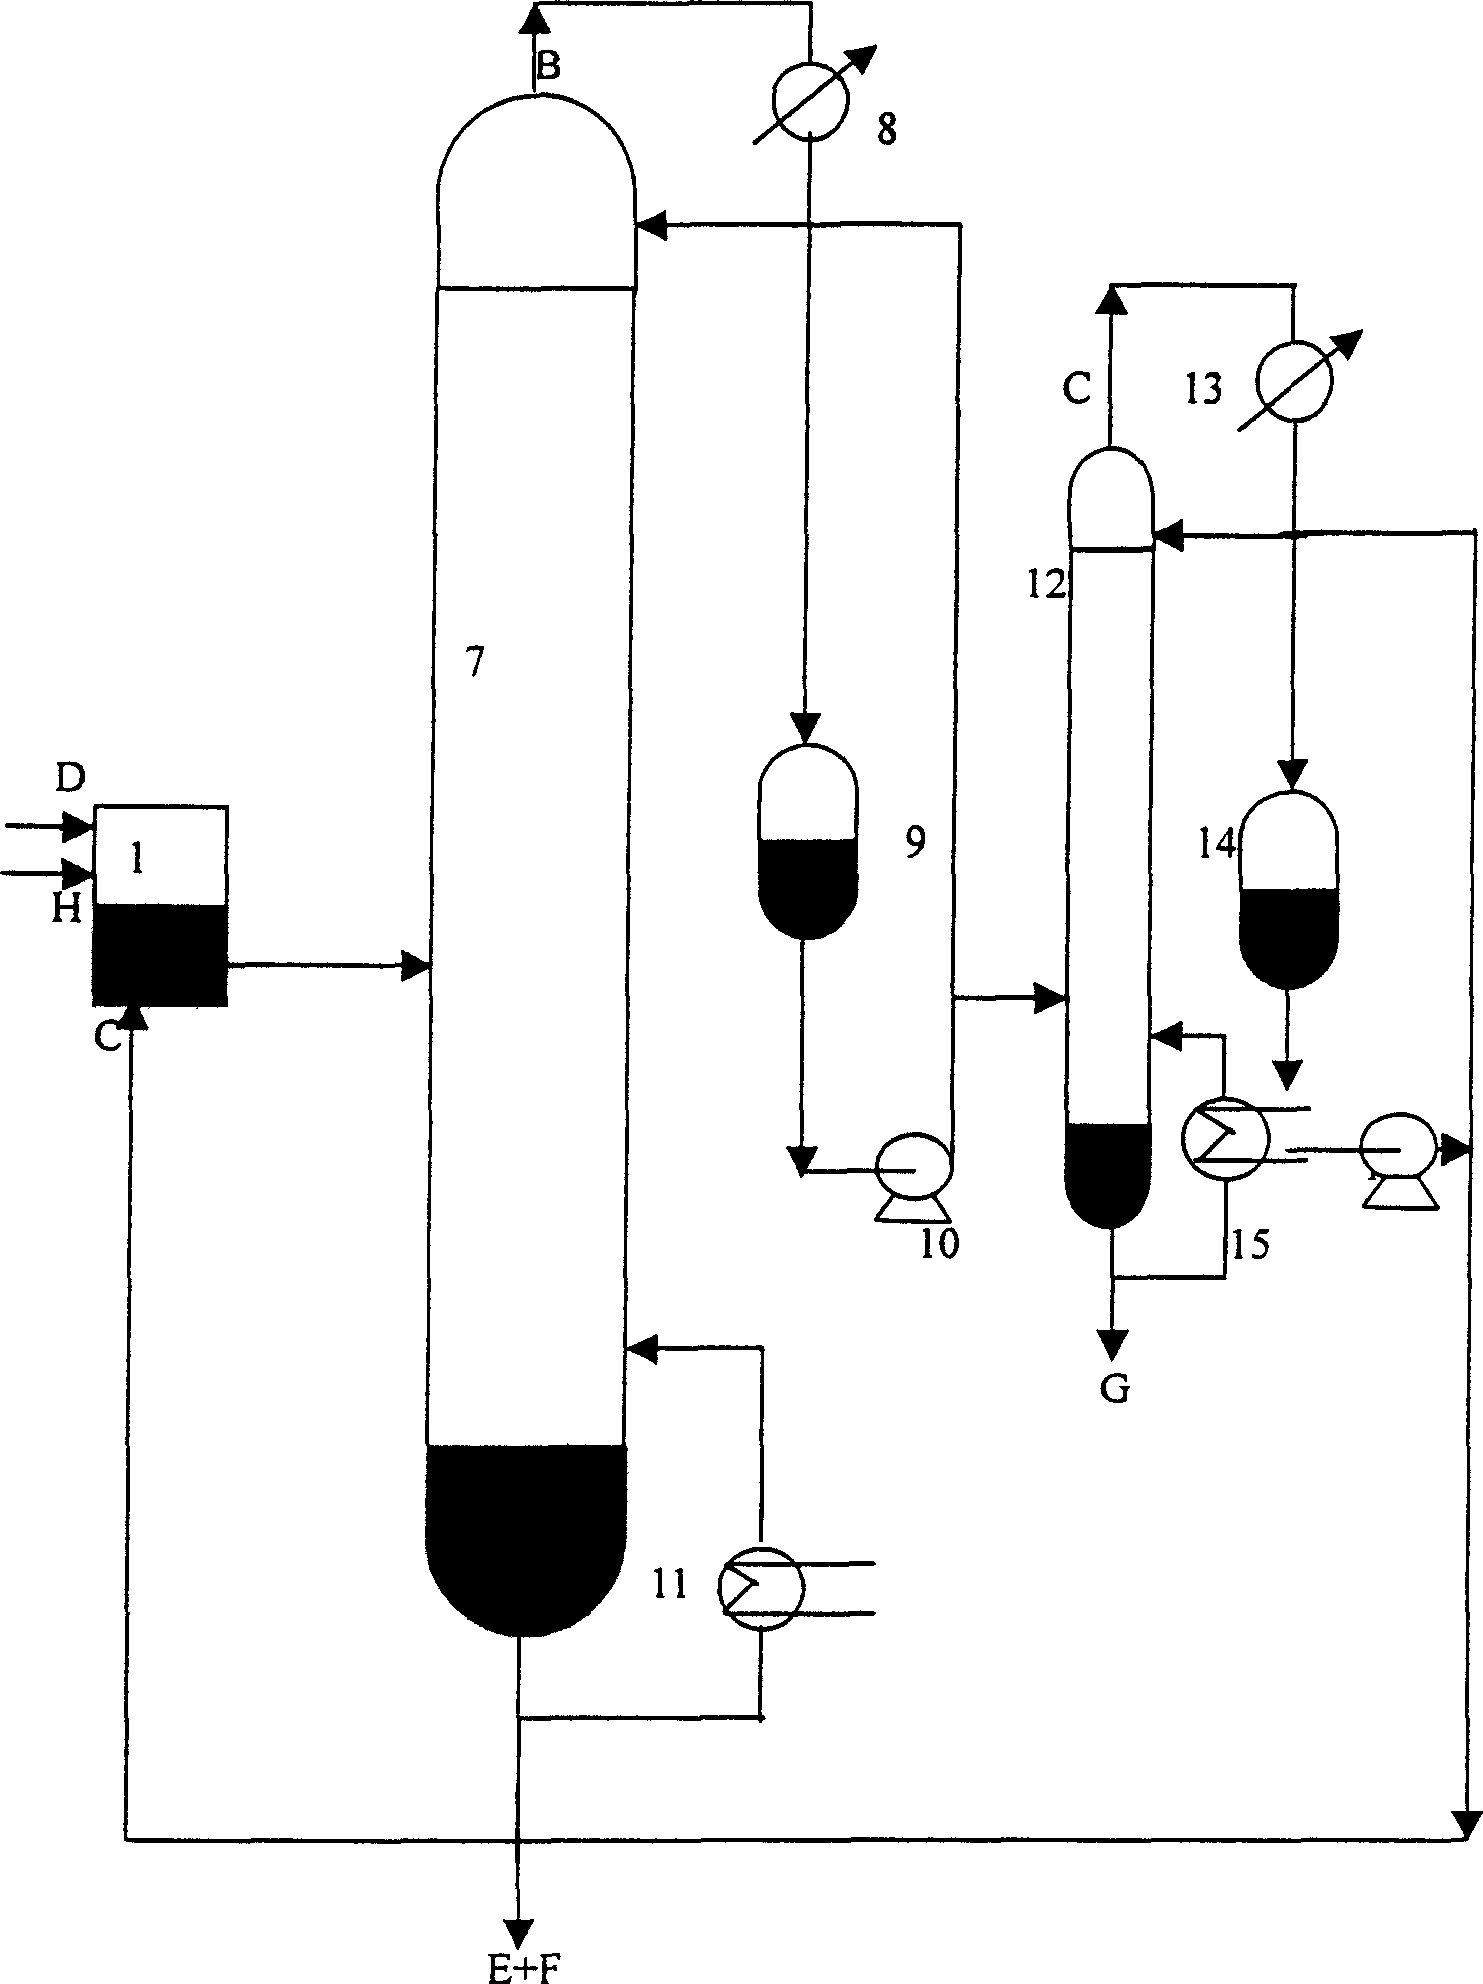 Production process for separating ethylbenzene and ortho-xylene from mixed xylene